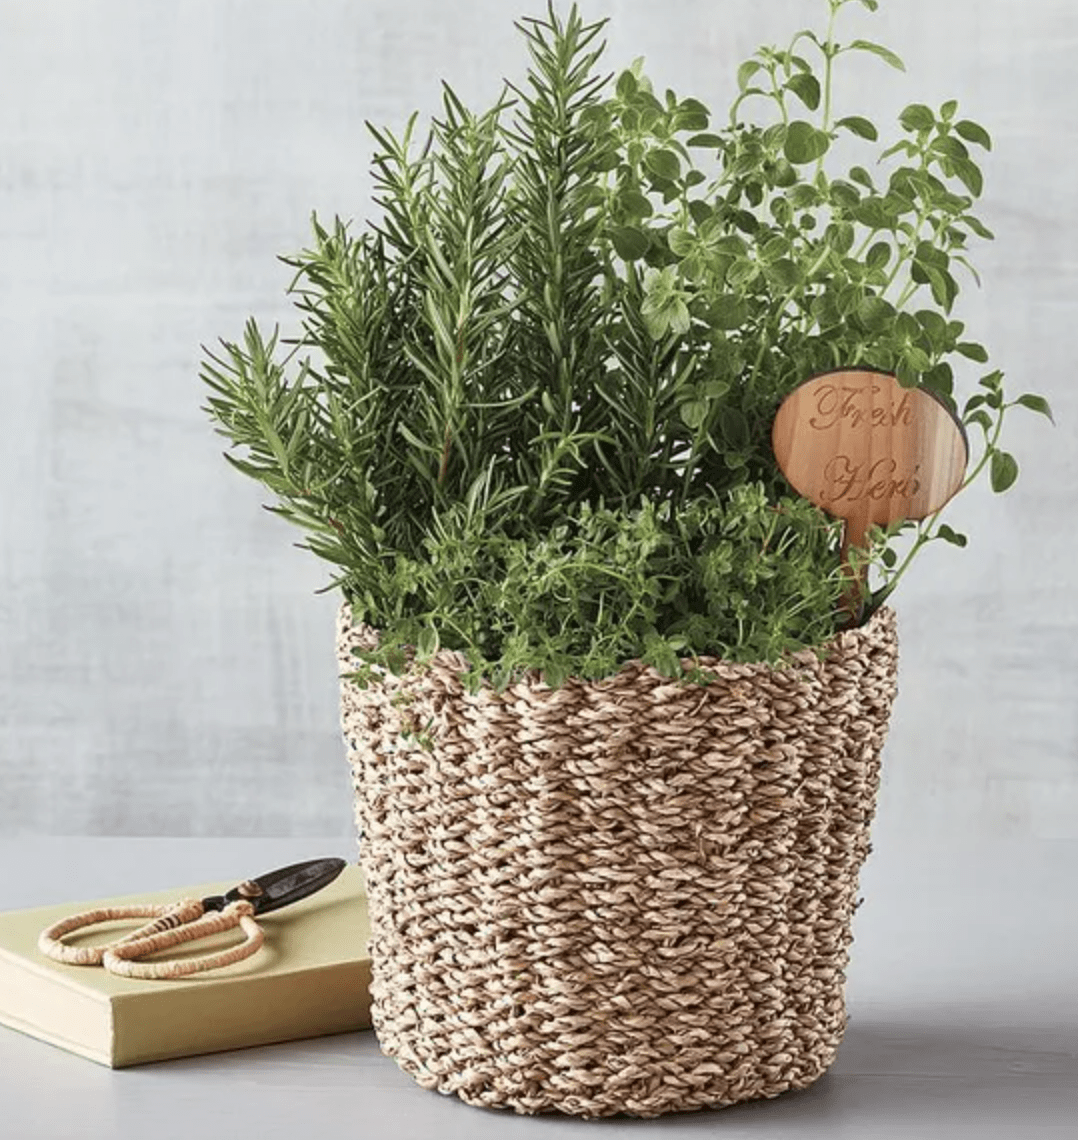 Lovely red Pom Pom trim storage wicker baskets gift baskets plant pots ideal for Mother\u2019s Day or valentines